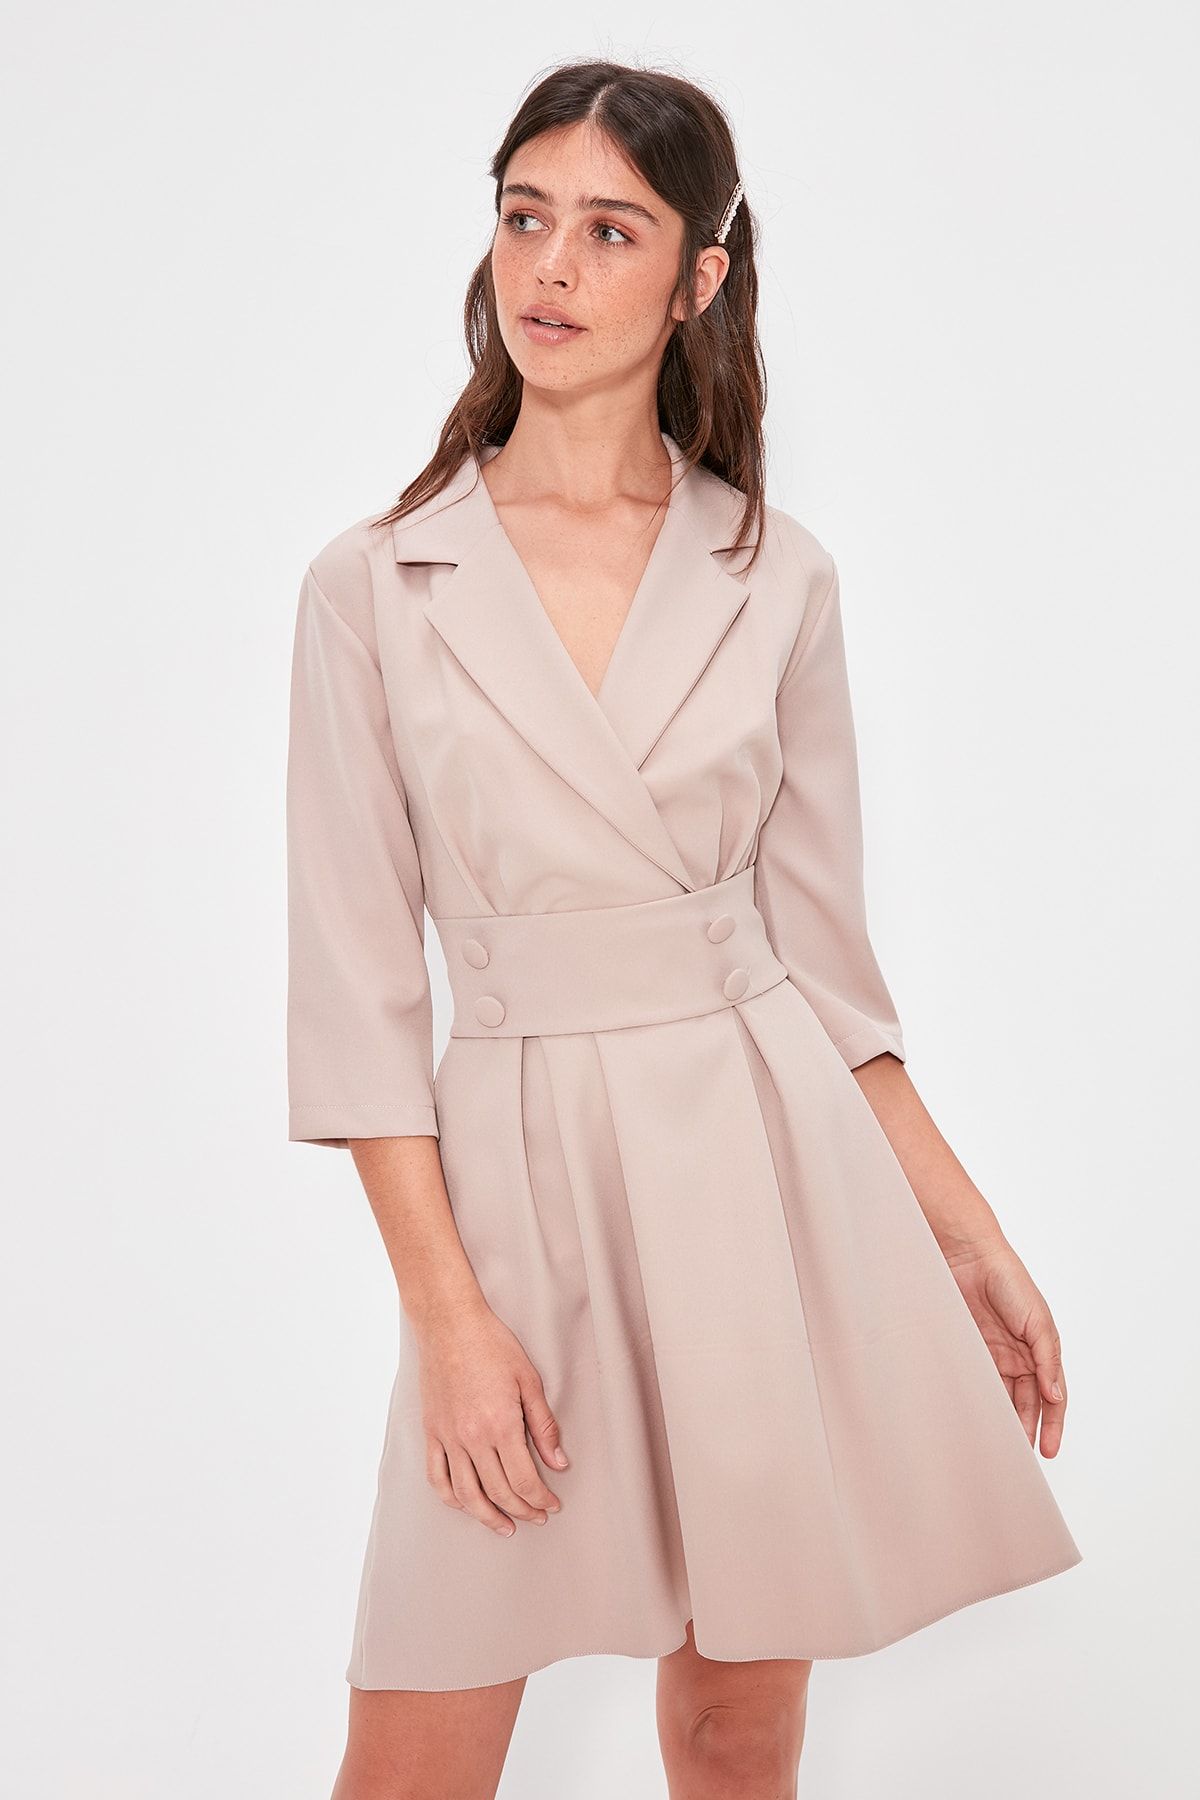 TRENDYOLMİLLA Taş Düğme Detaylı Elbise TWOAW20EL0112